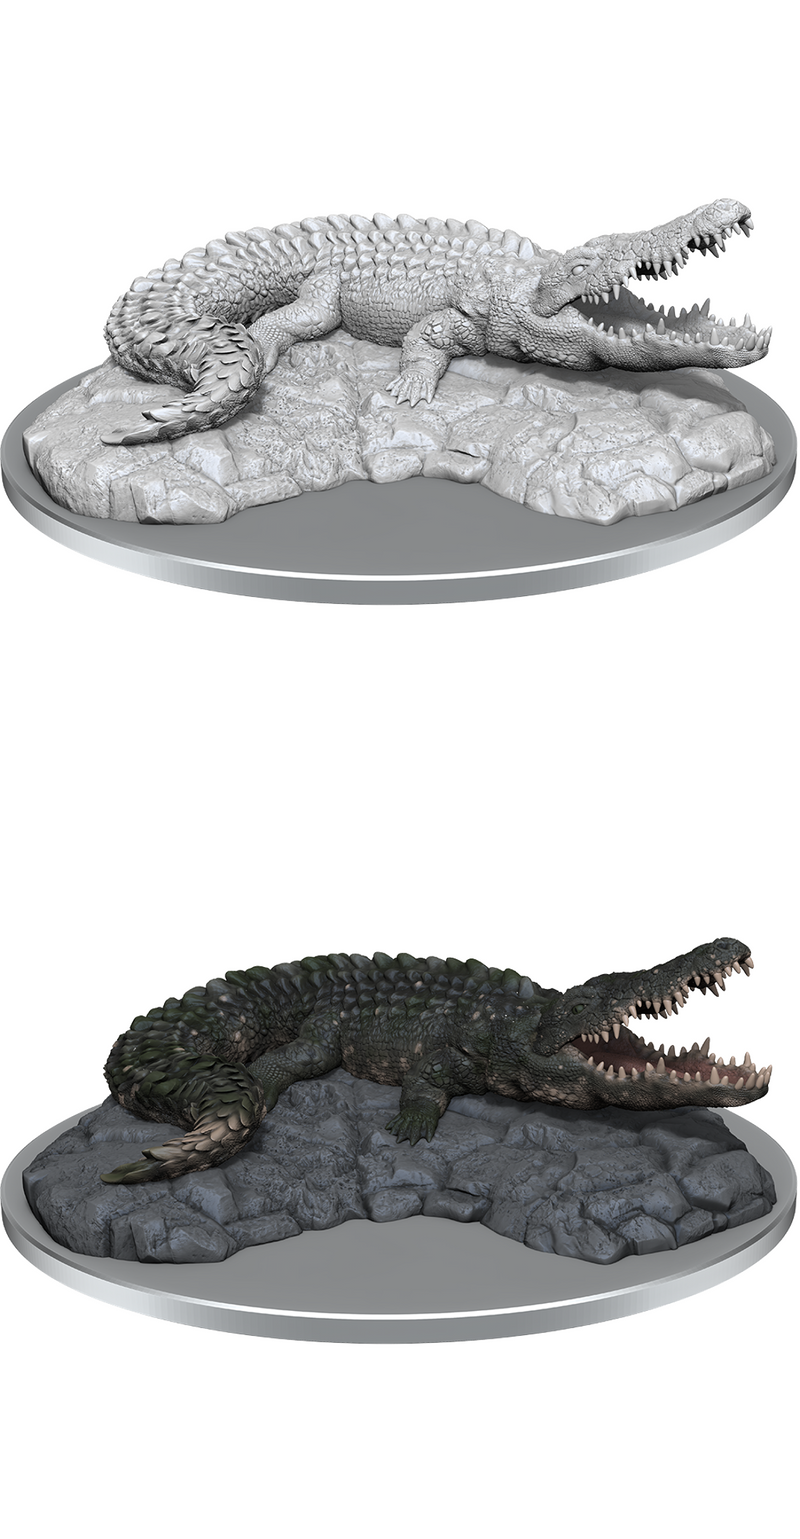 WizKids Deep Cuts Unpainted Miniatures: Giant Crocodile